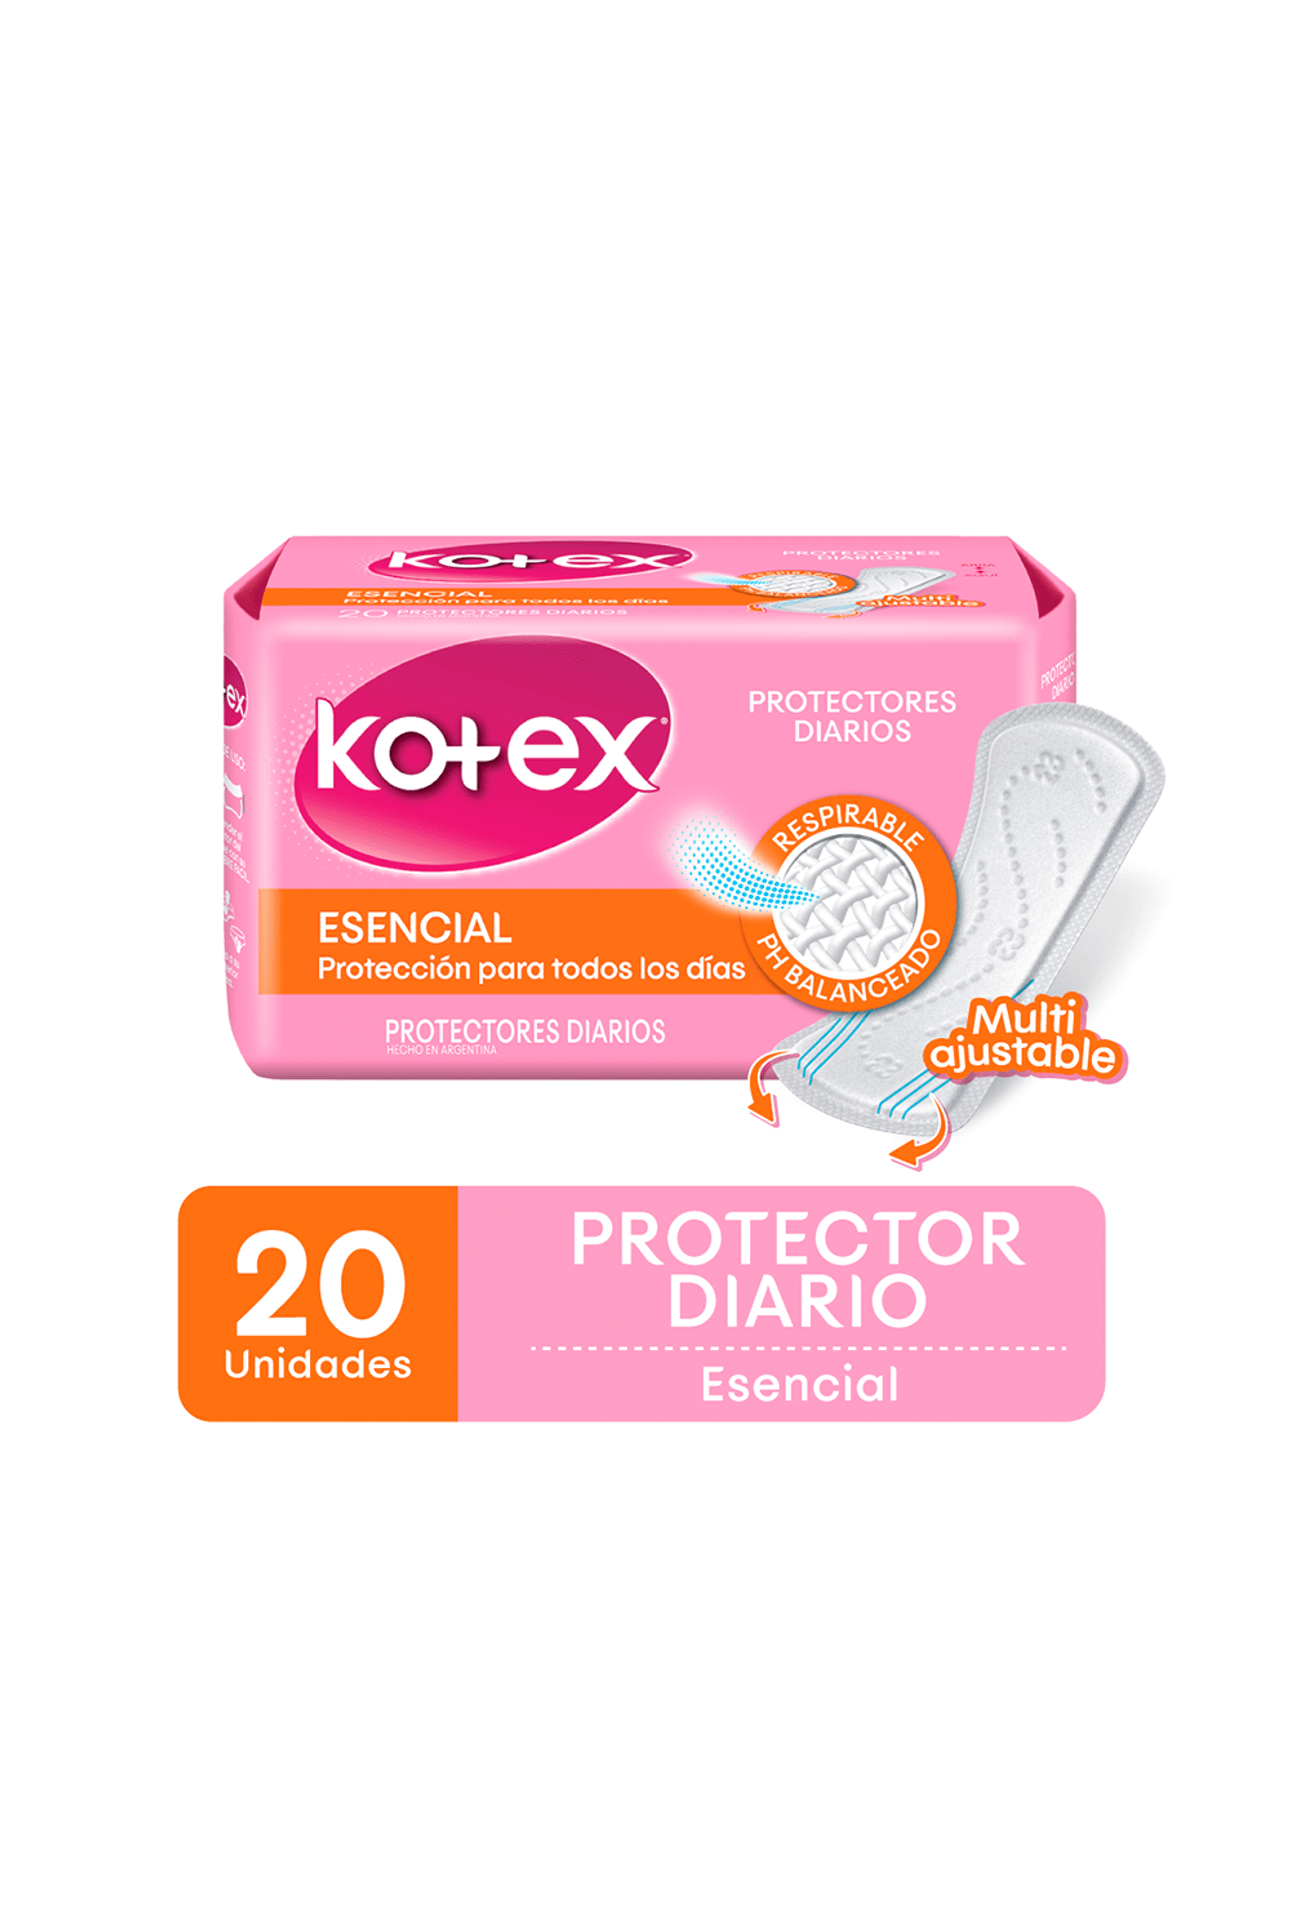 Kotex-Protectores-Diarios-Esencial-x-20un-7794626011368_img1